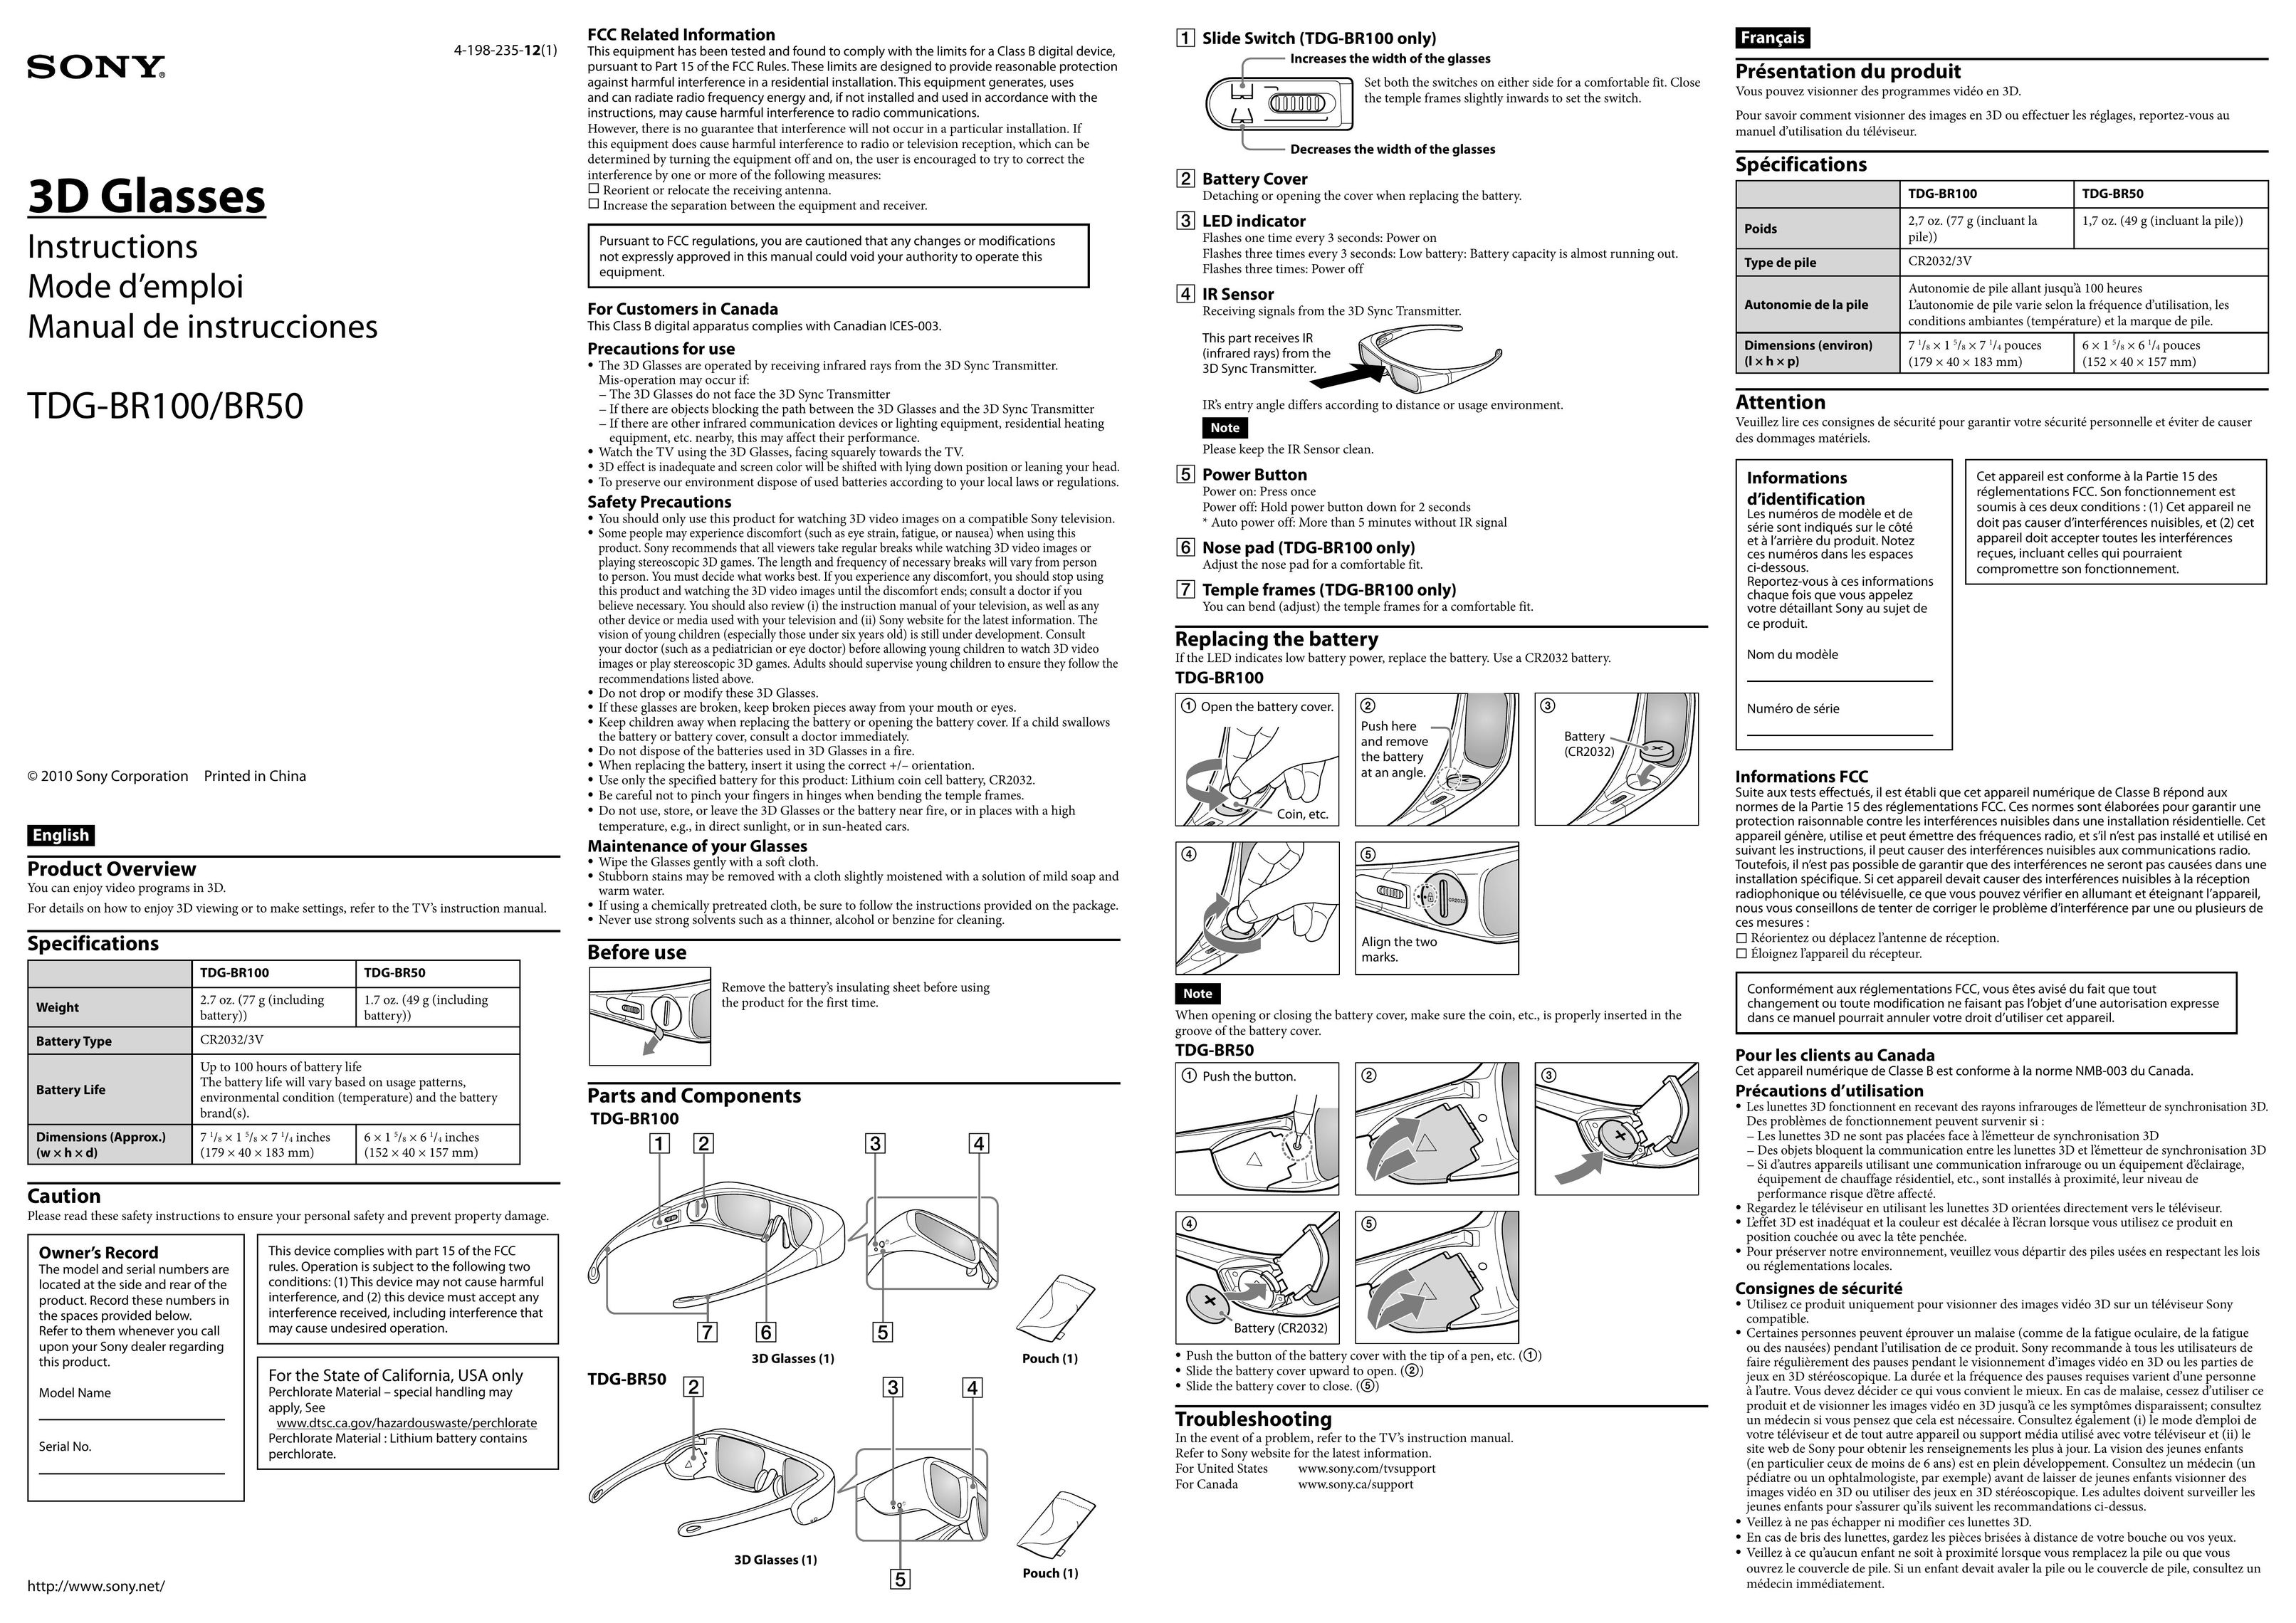 Sony TDG-BR100 Binoculars User Manual